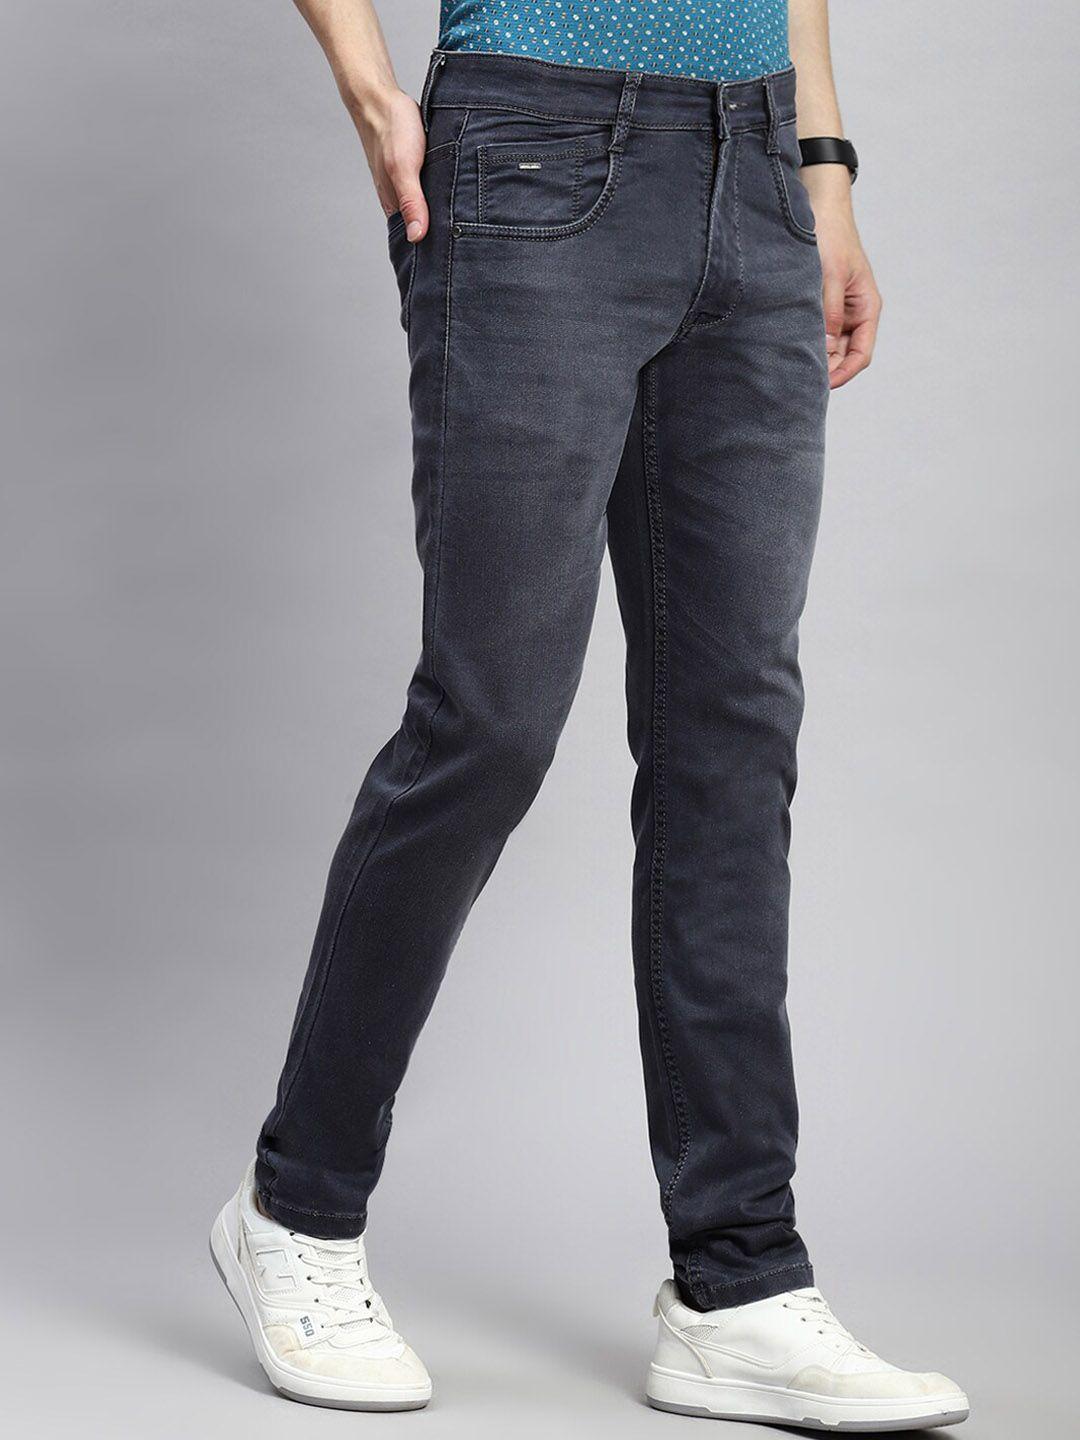 monte-carlo-men-skinny-fit-clean-look-light-fade-jeans